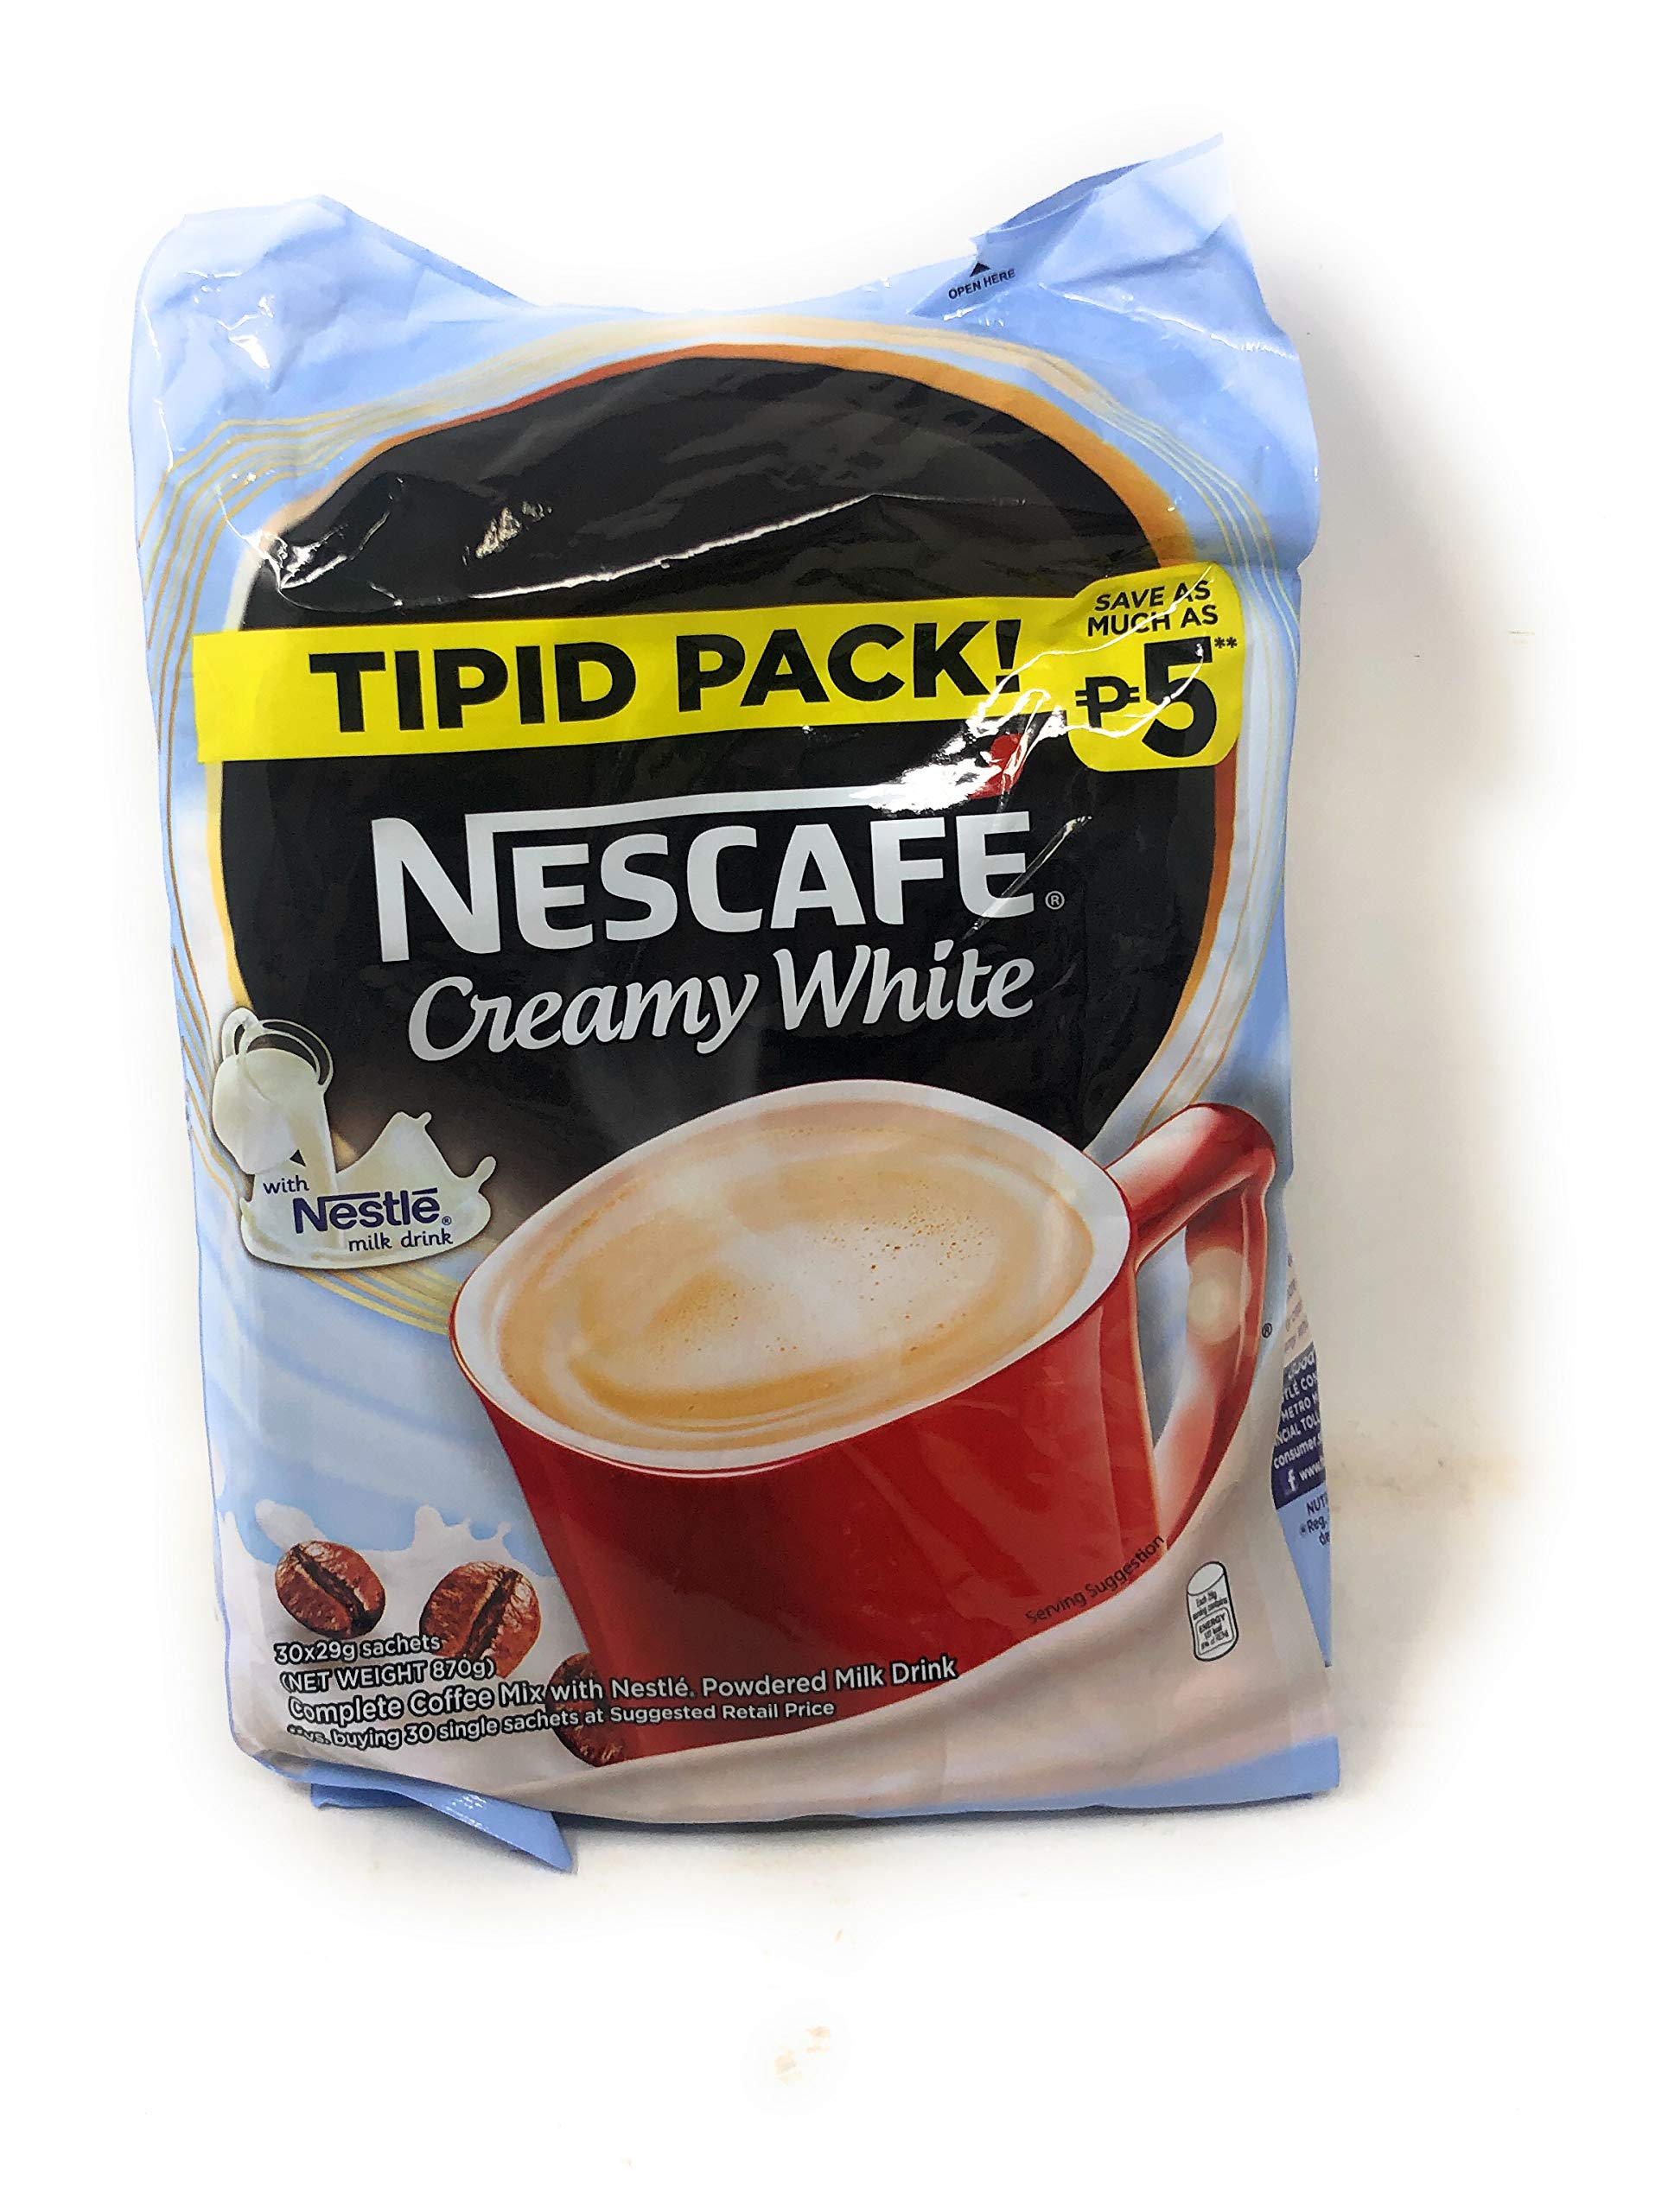 Nescaf e blend Philippines brew groundbag coffee